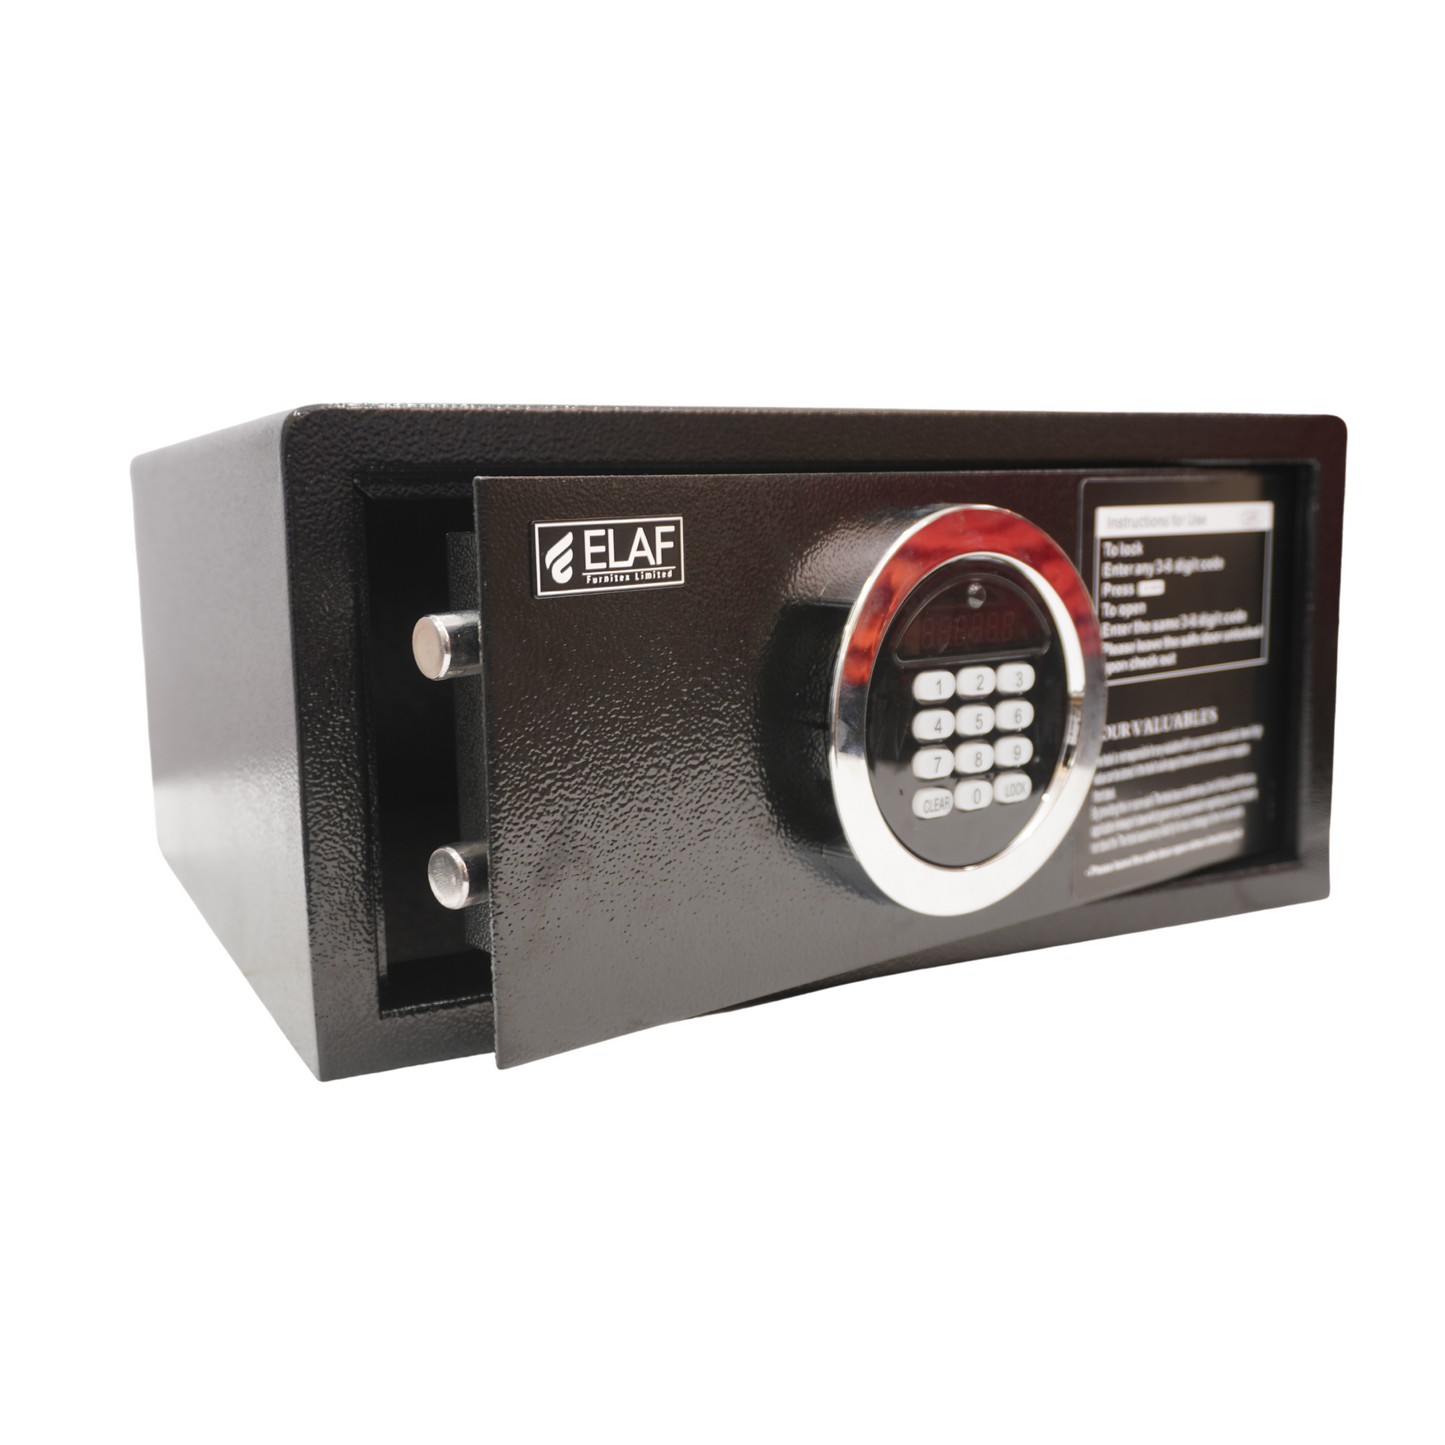 Digital Safety Locker (FT-2042N)